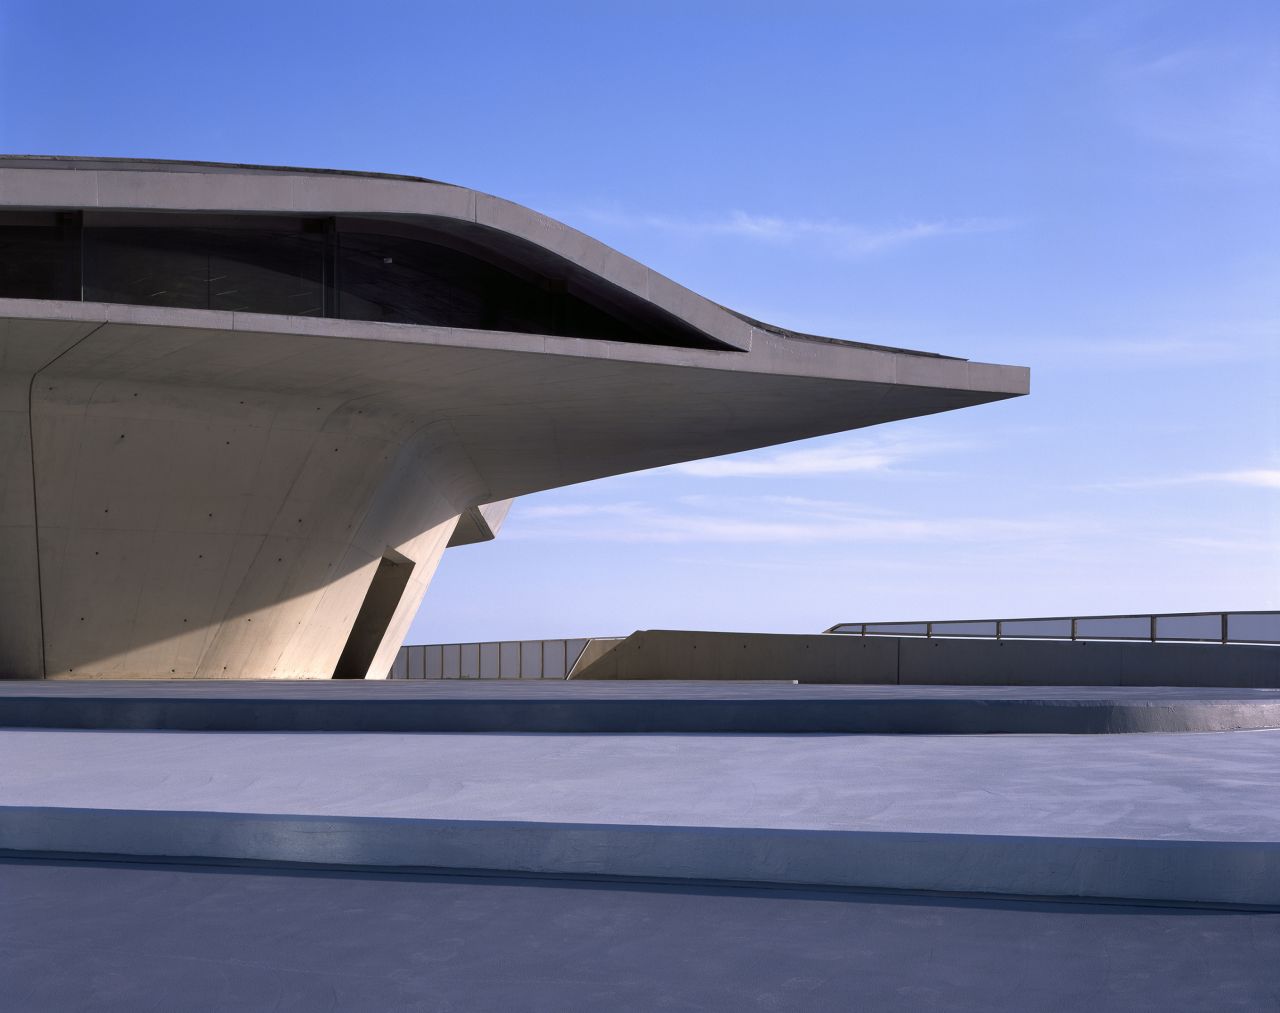 The Salerno Maritime Terminal in Salerno, Italy by Zaha Hadid Architects